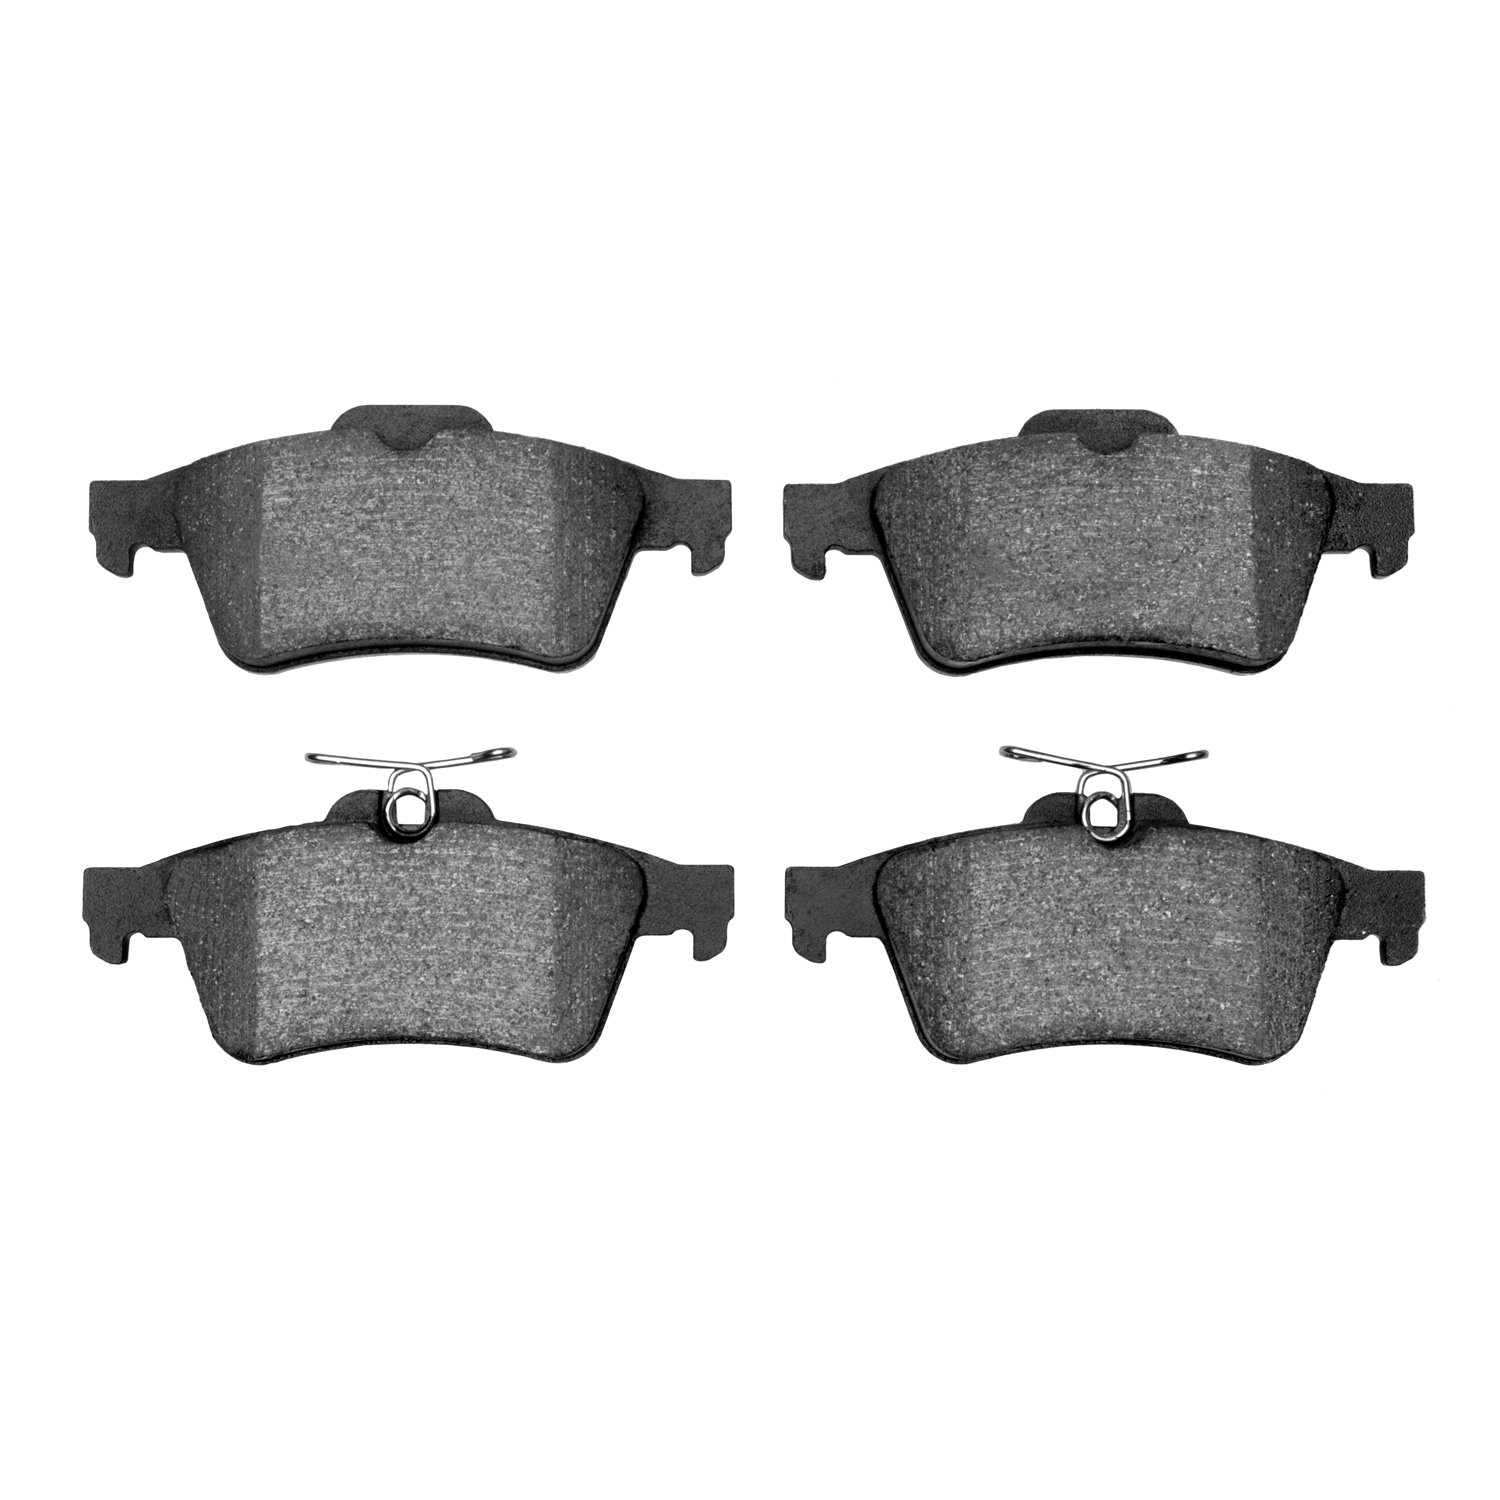 Ceramic Brake Pads, Fits Select Fits Multiple Makes/Models, Position: Rear